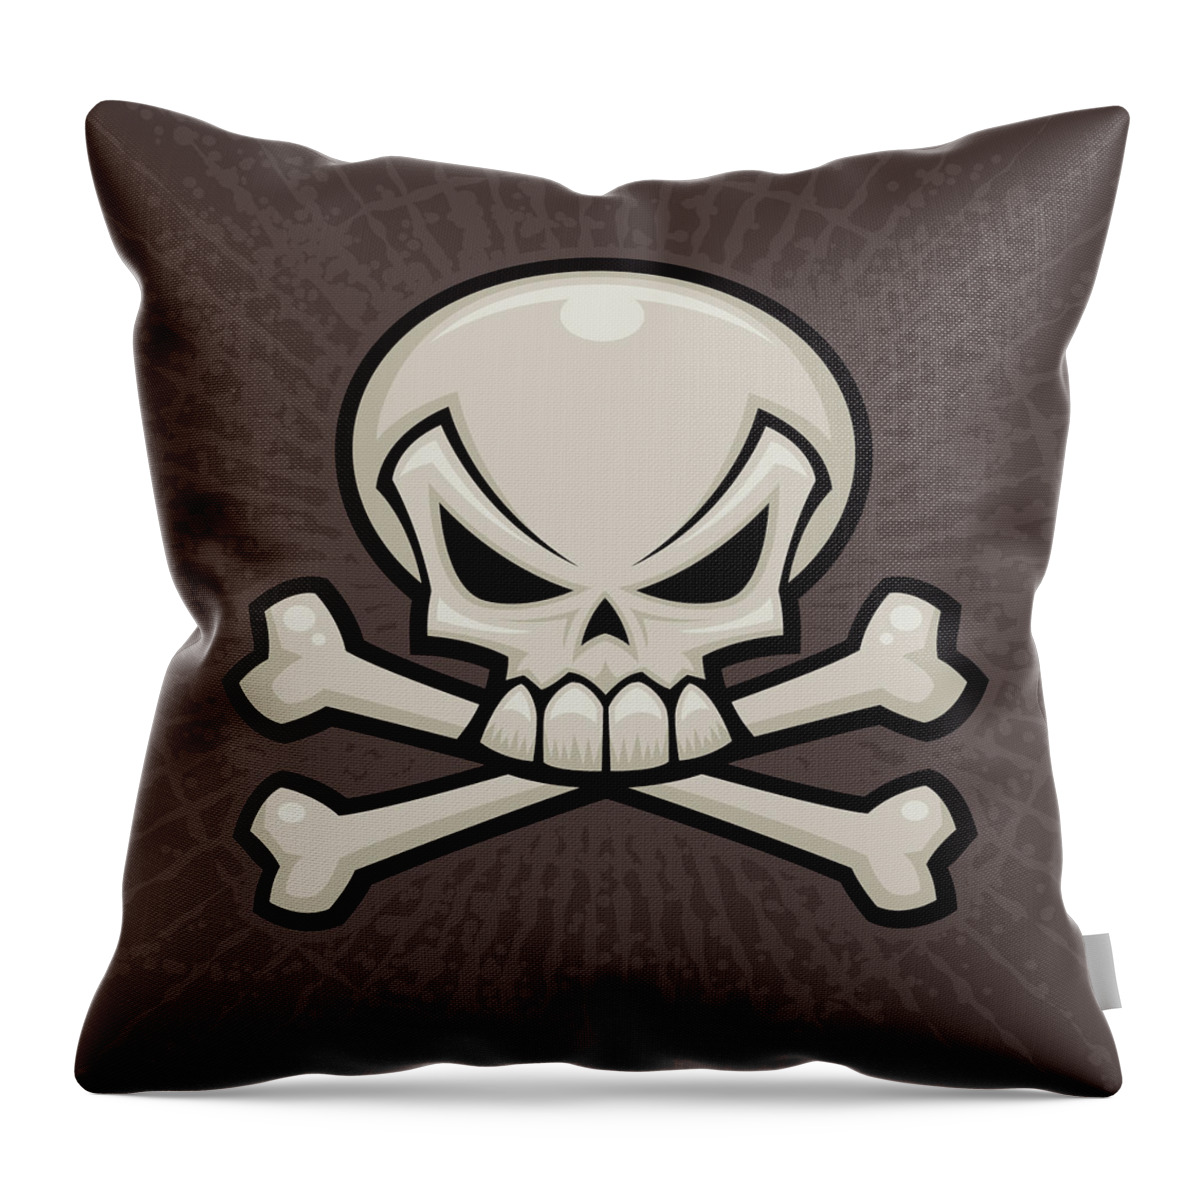 Bone Throw Pillow featuring the digital art Skull and Crossbones by John Schwegel